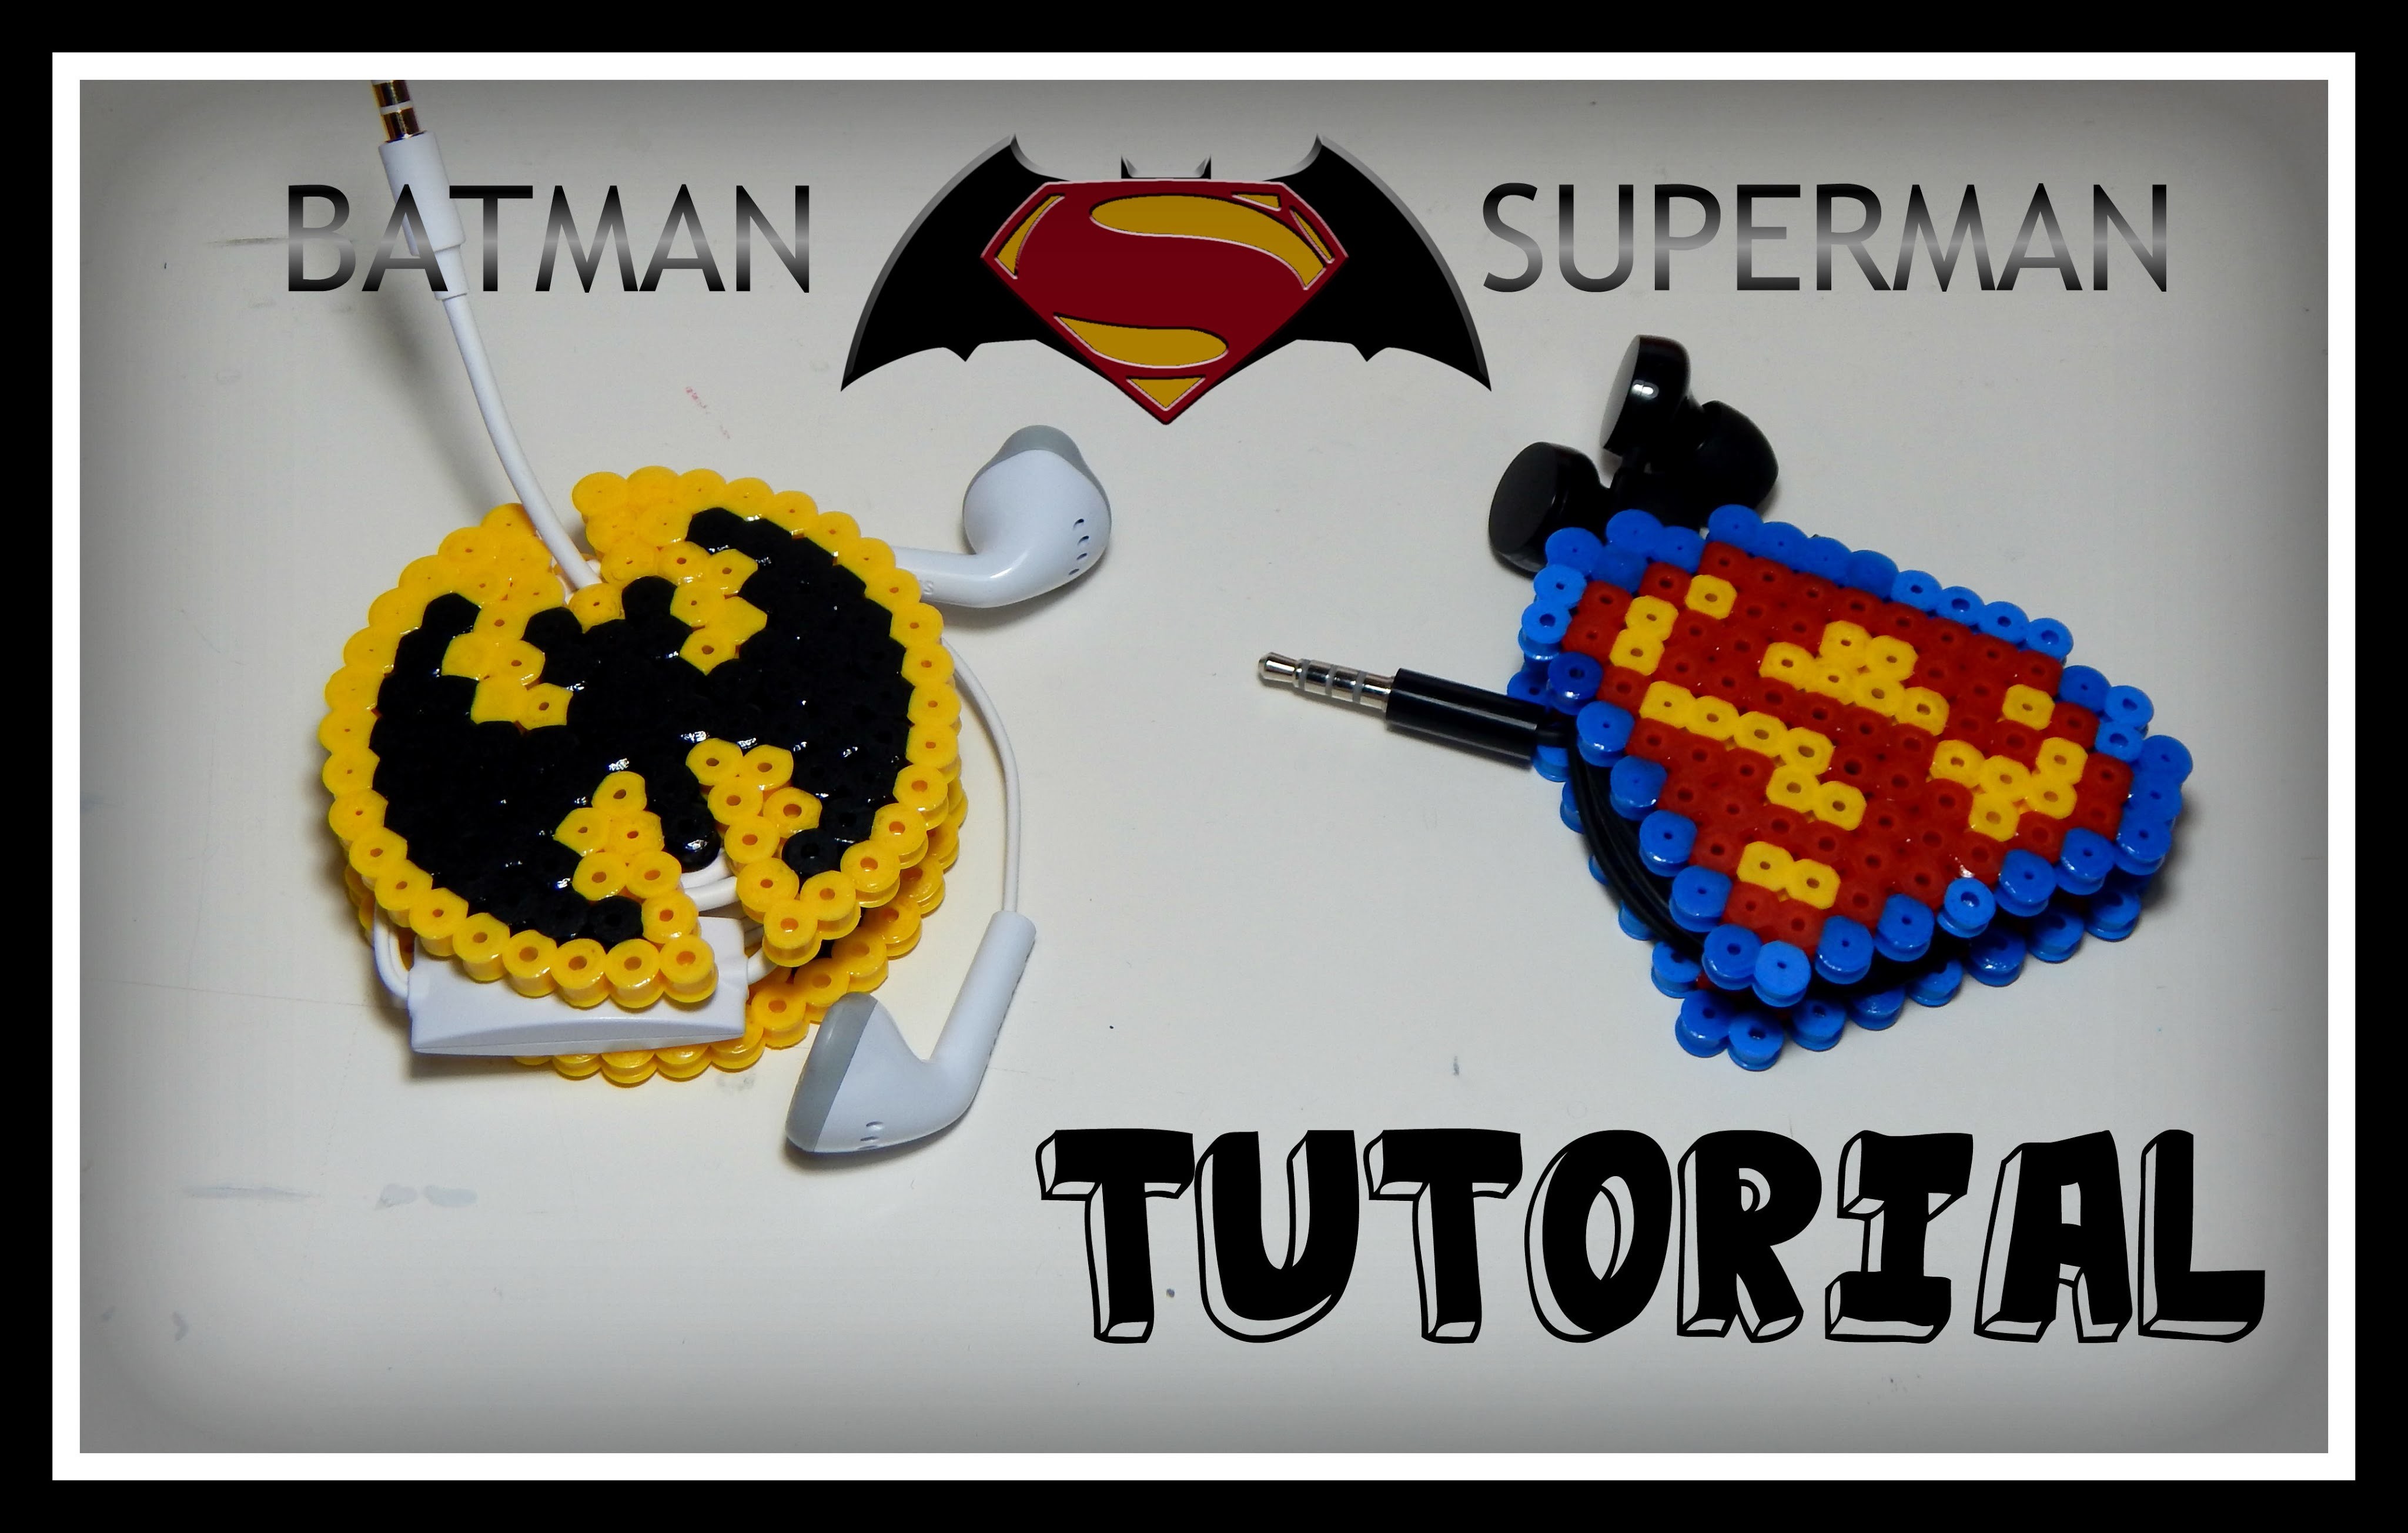 Batman vs Superman PORTA CUFFIETTE.AURICOLARI con Hama beads.Pyssla.Perler DIY Tutorial